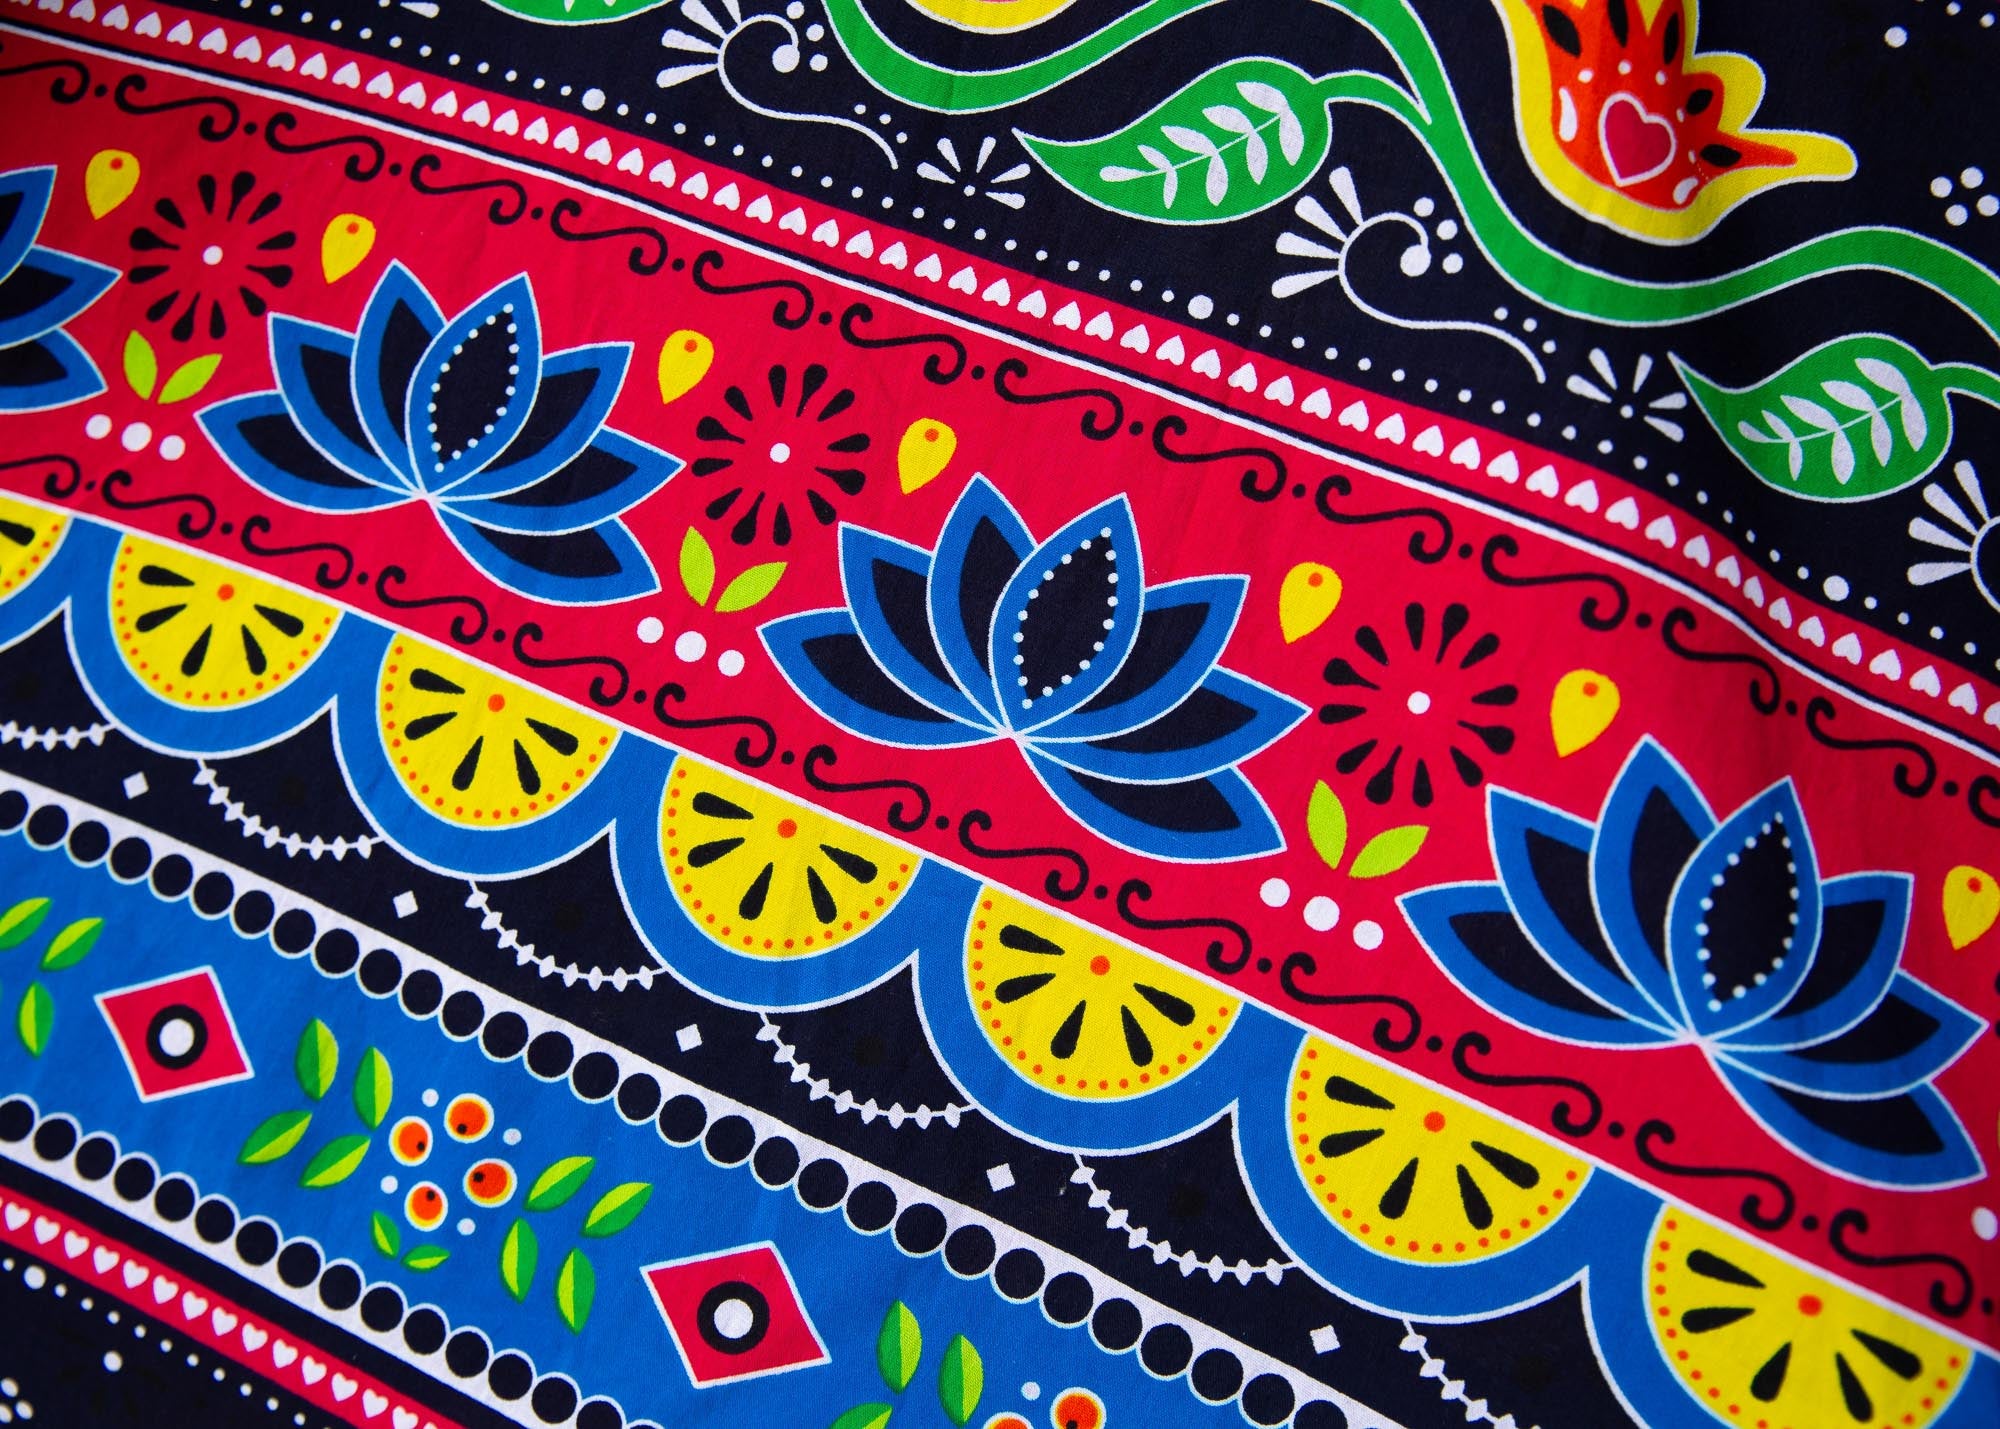 Close up display of colorful mandala print dress